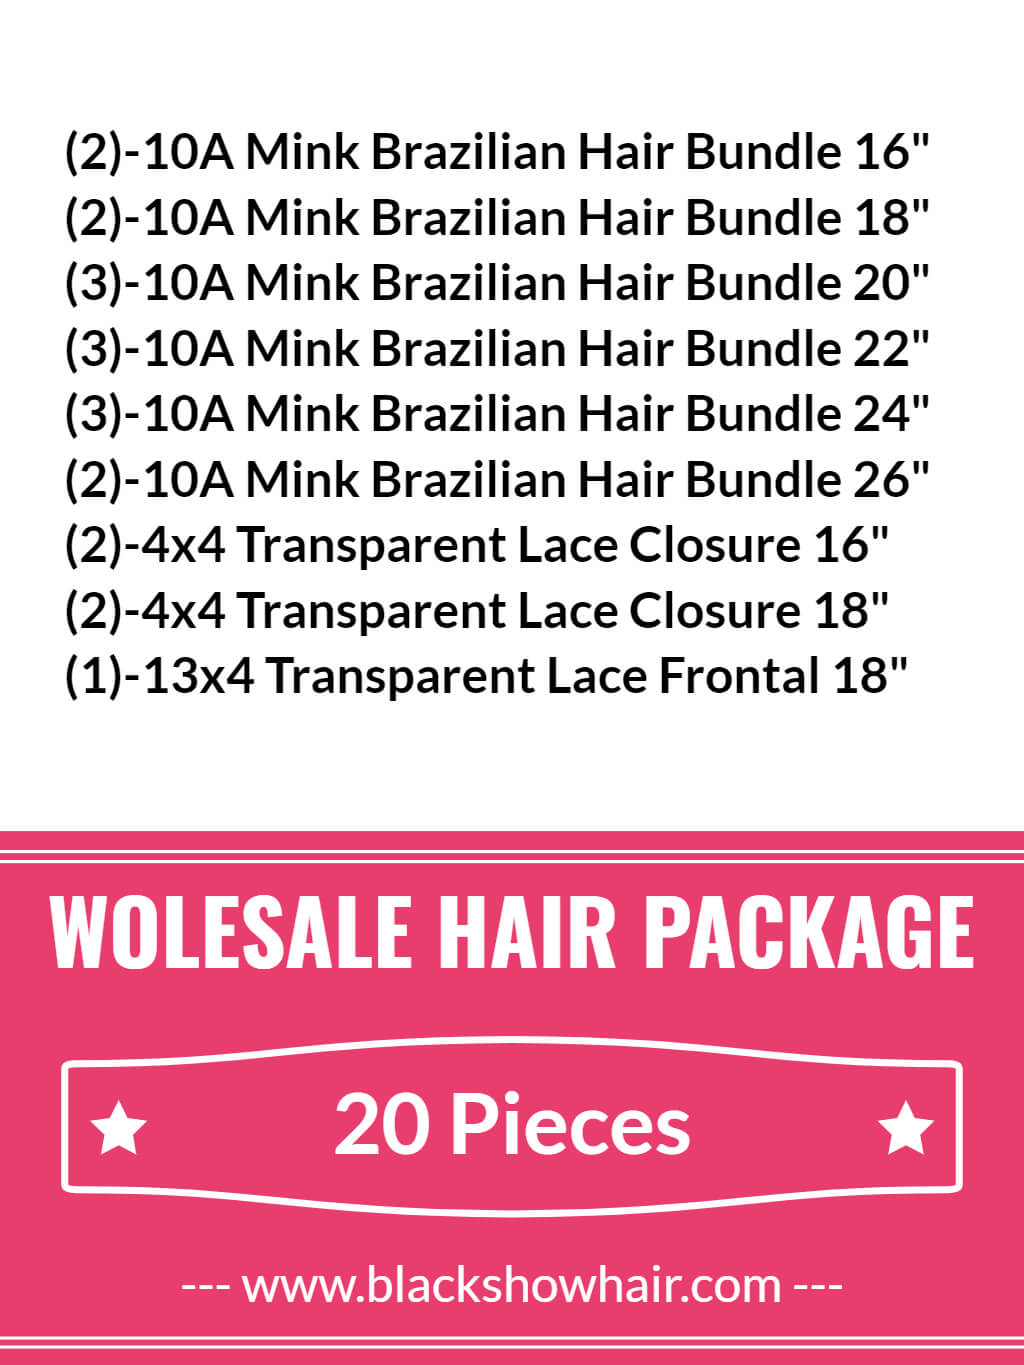 Mink Brazilian Hair Wholesale Hair Bundles Bulk 20 Pieces - Black Show Hair